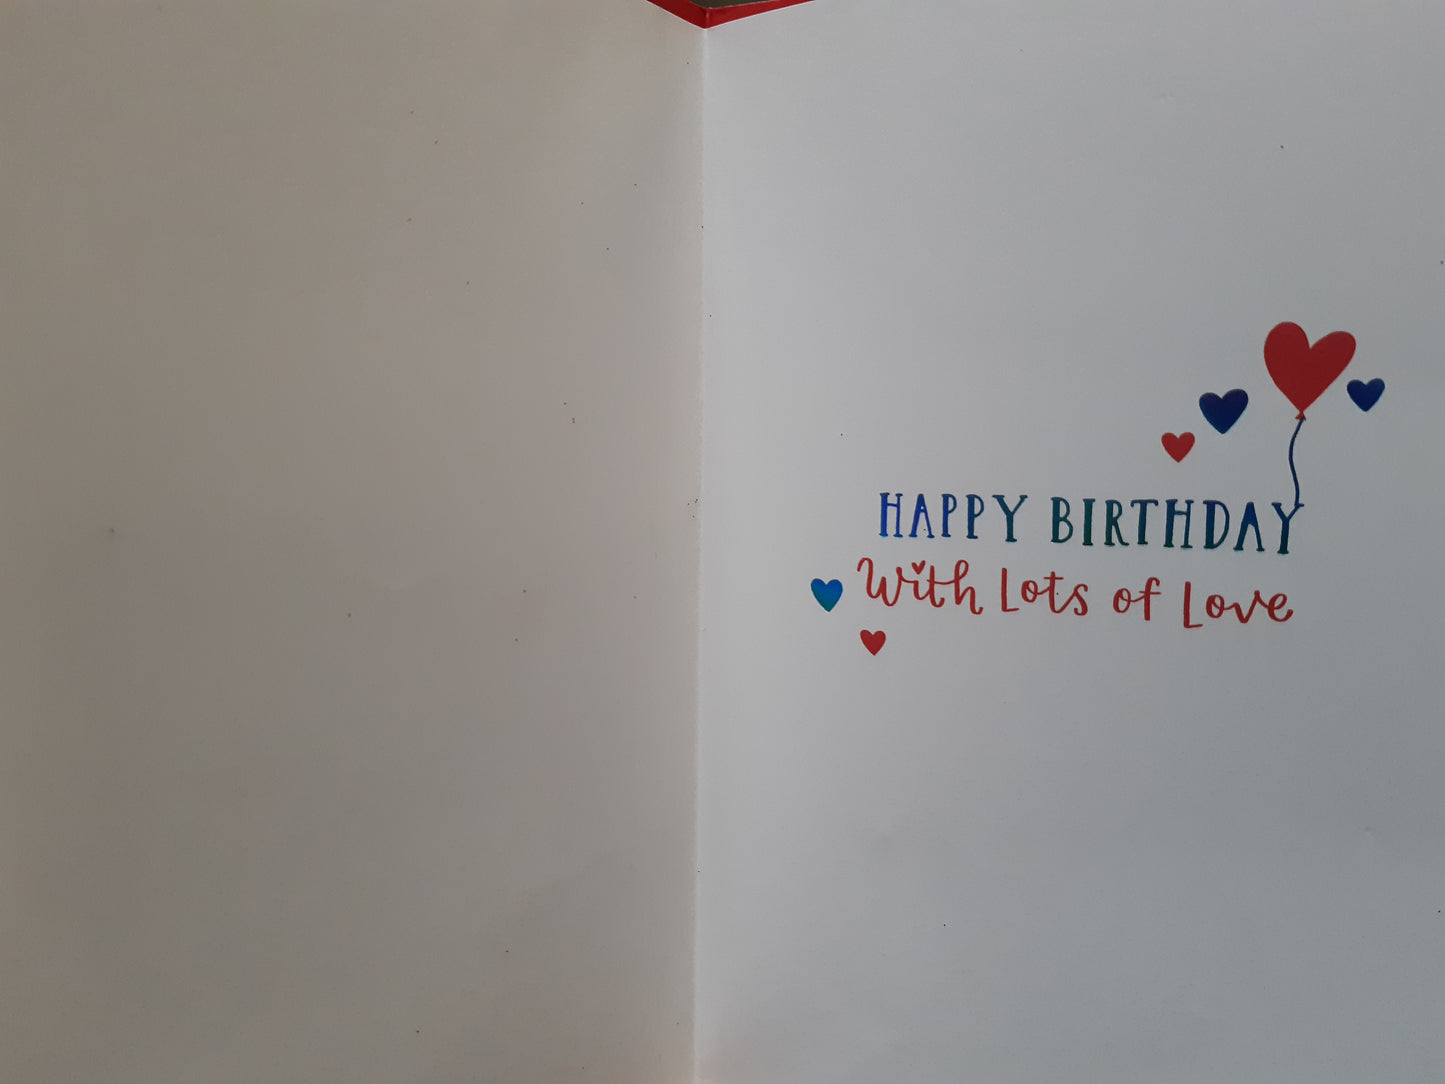 For My Amazing Boyfriend Stunning Birthday Card 